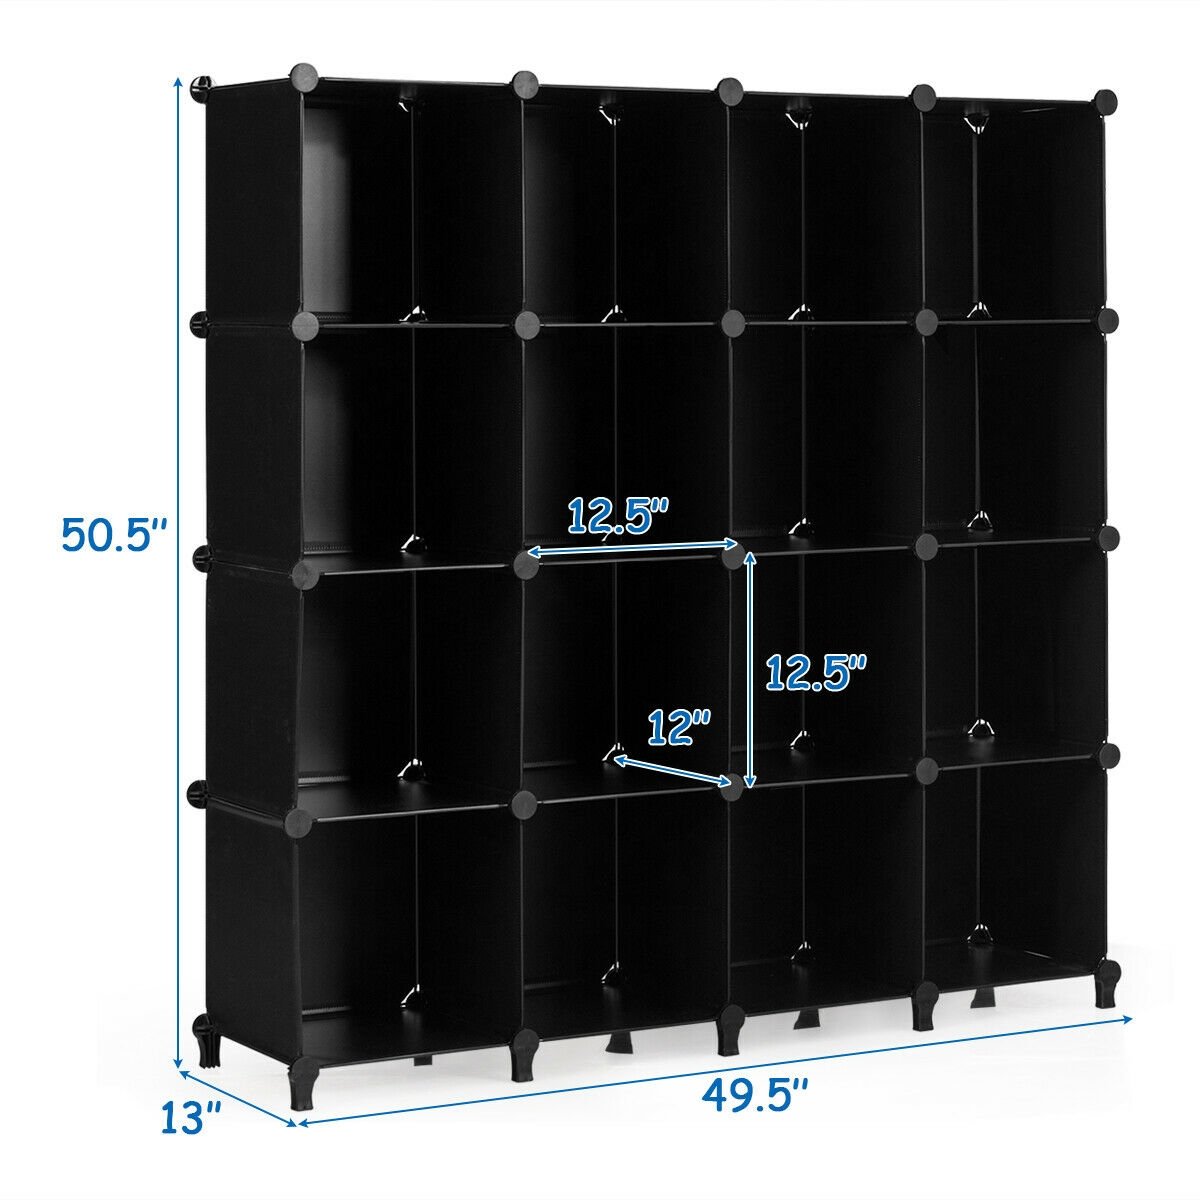 16 Plastic Cube Storage Organizer, Black Clothing & Closet Storage   at Gallery Canada